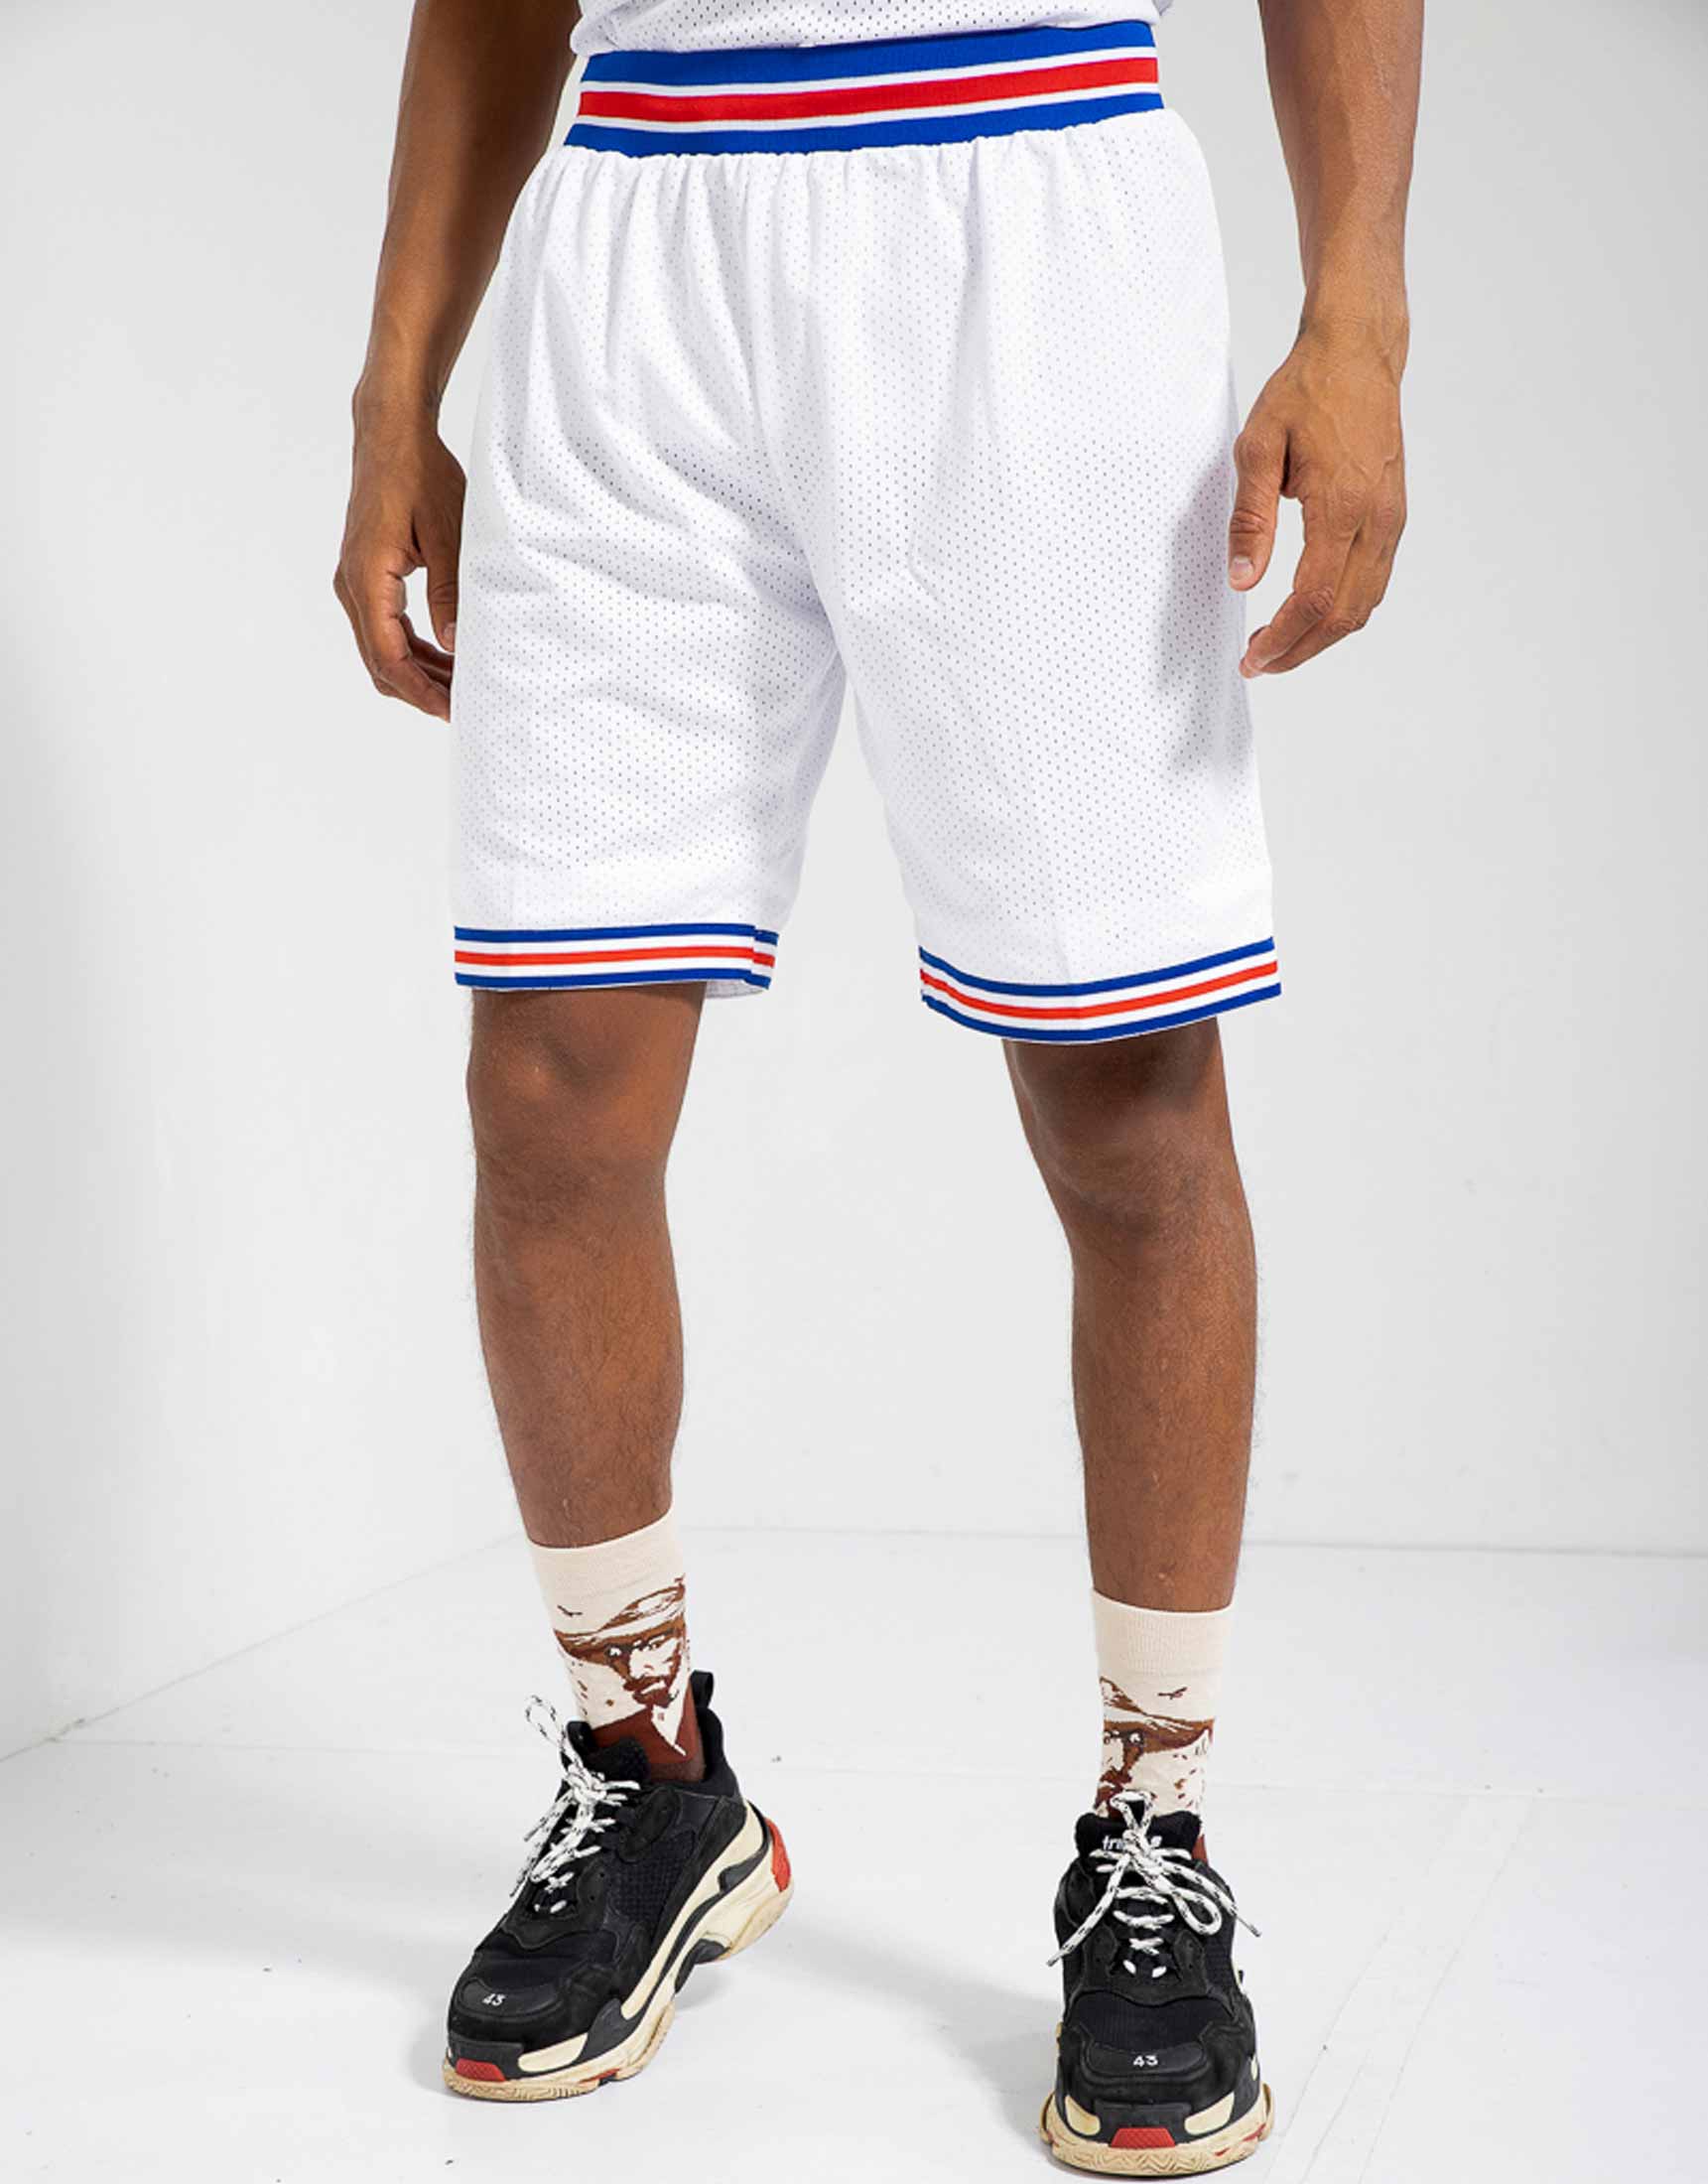 fashion basketball shorts